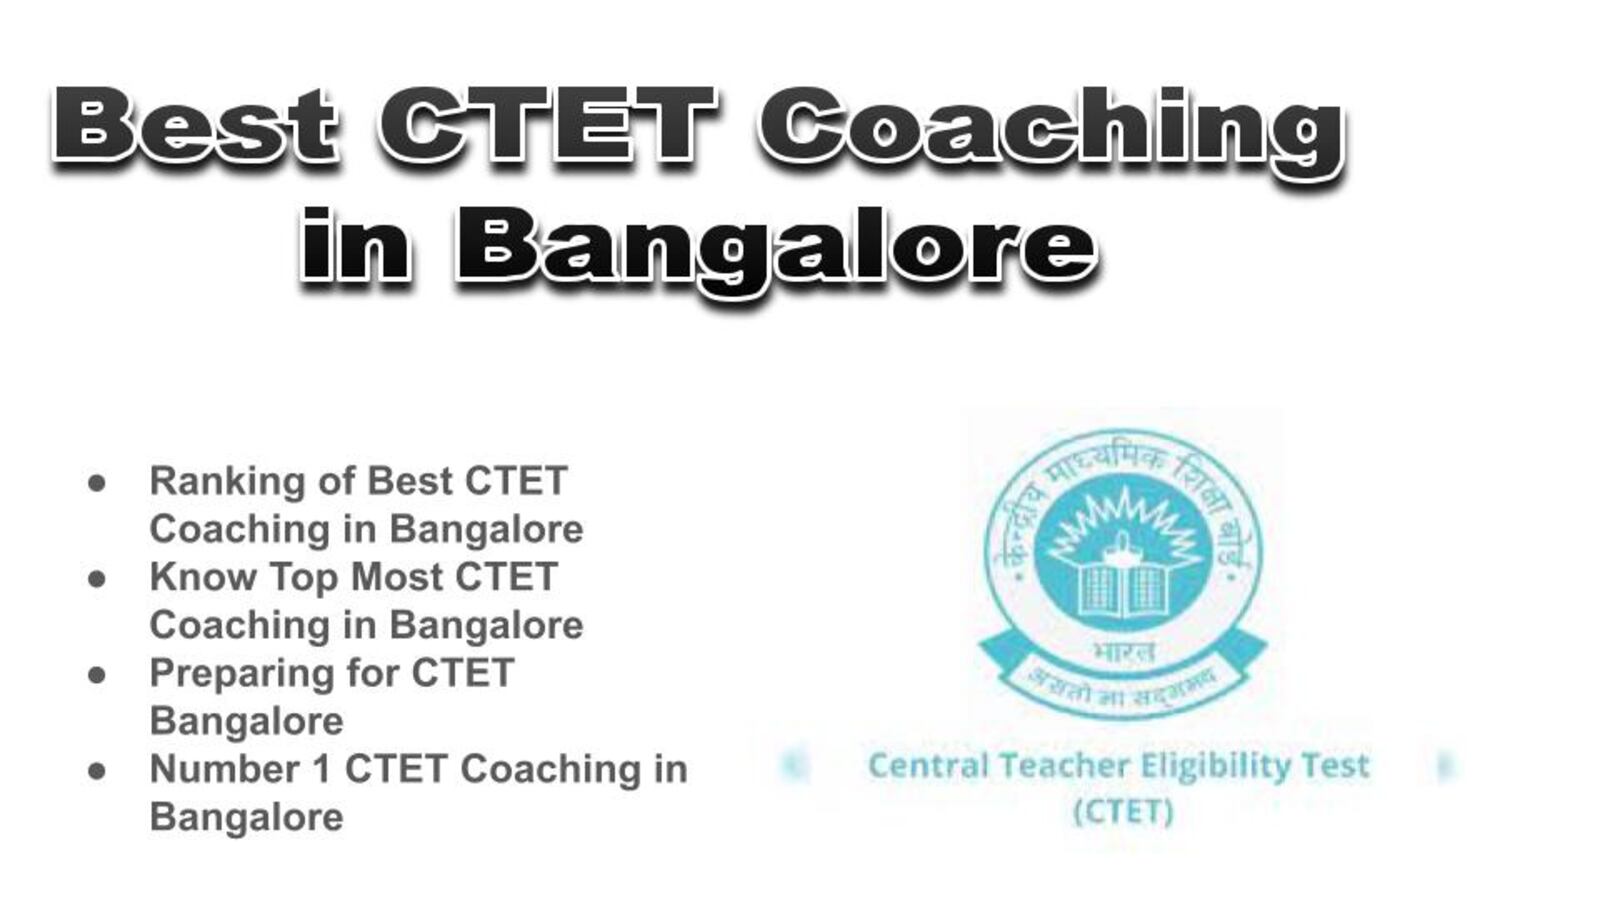 Best CTET Coaching in Bangalore